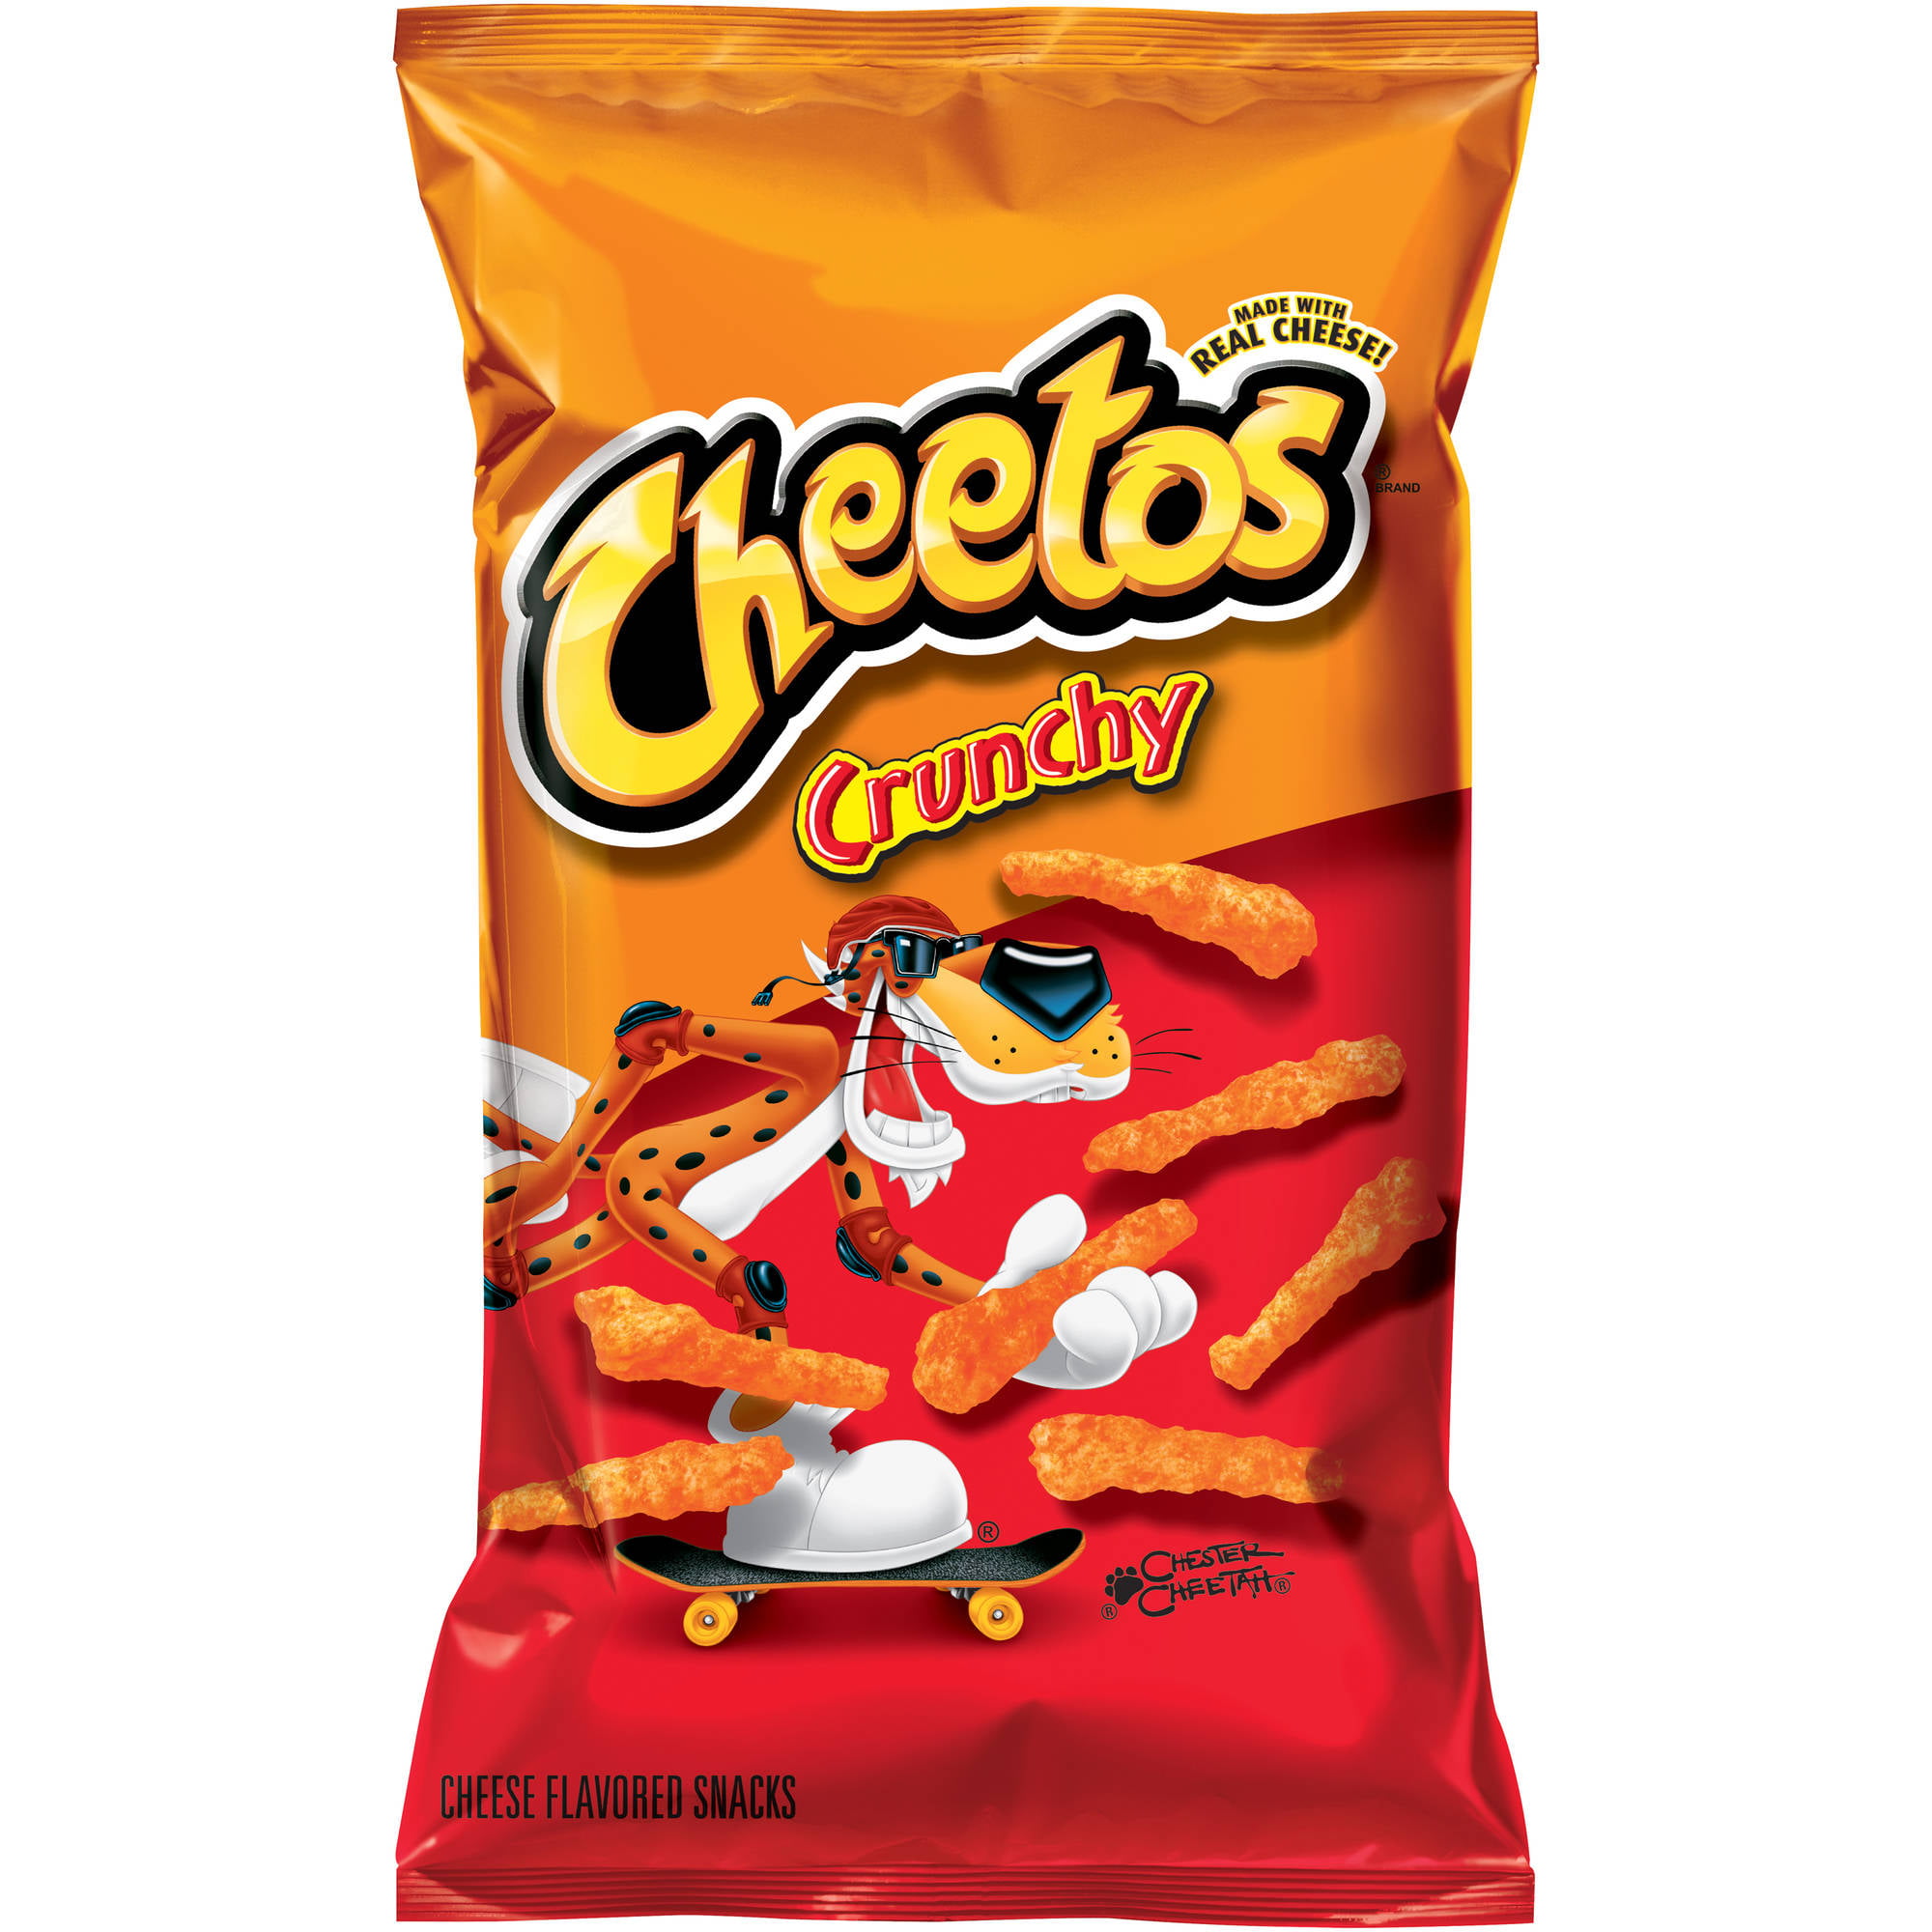 Cheetos Crunchy Cheese Flavored Snacks, 9 oz. - Walmart.com